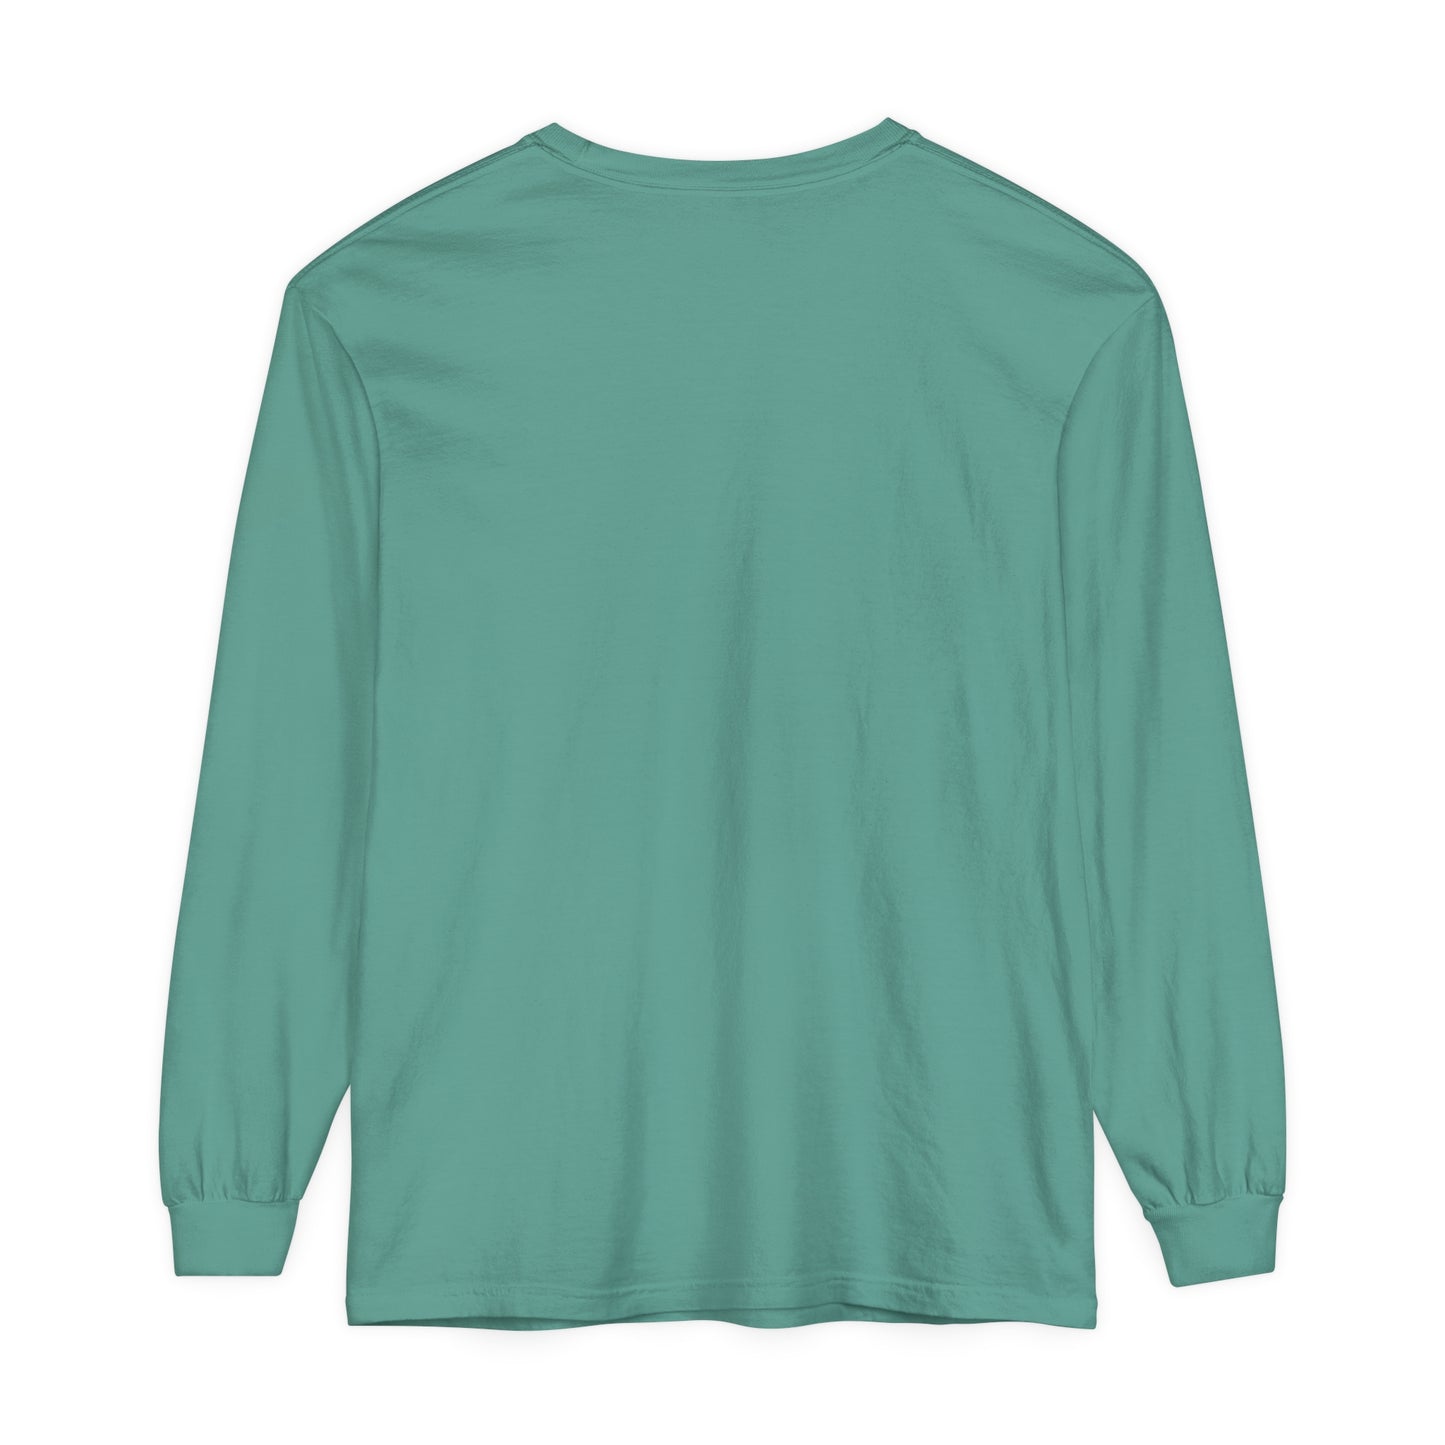 Mint long sleeve shirt with Logo in the middle• მენთოლის ფერი გრძელმკლავიანი მაისური ცენტრში ლოგოთი (UNISEX)